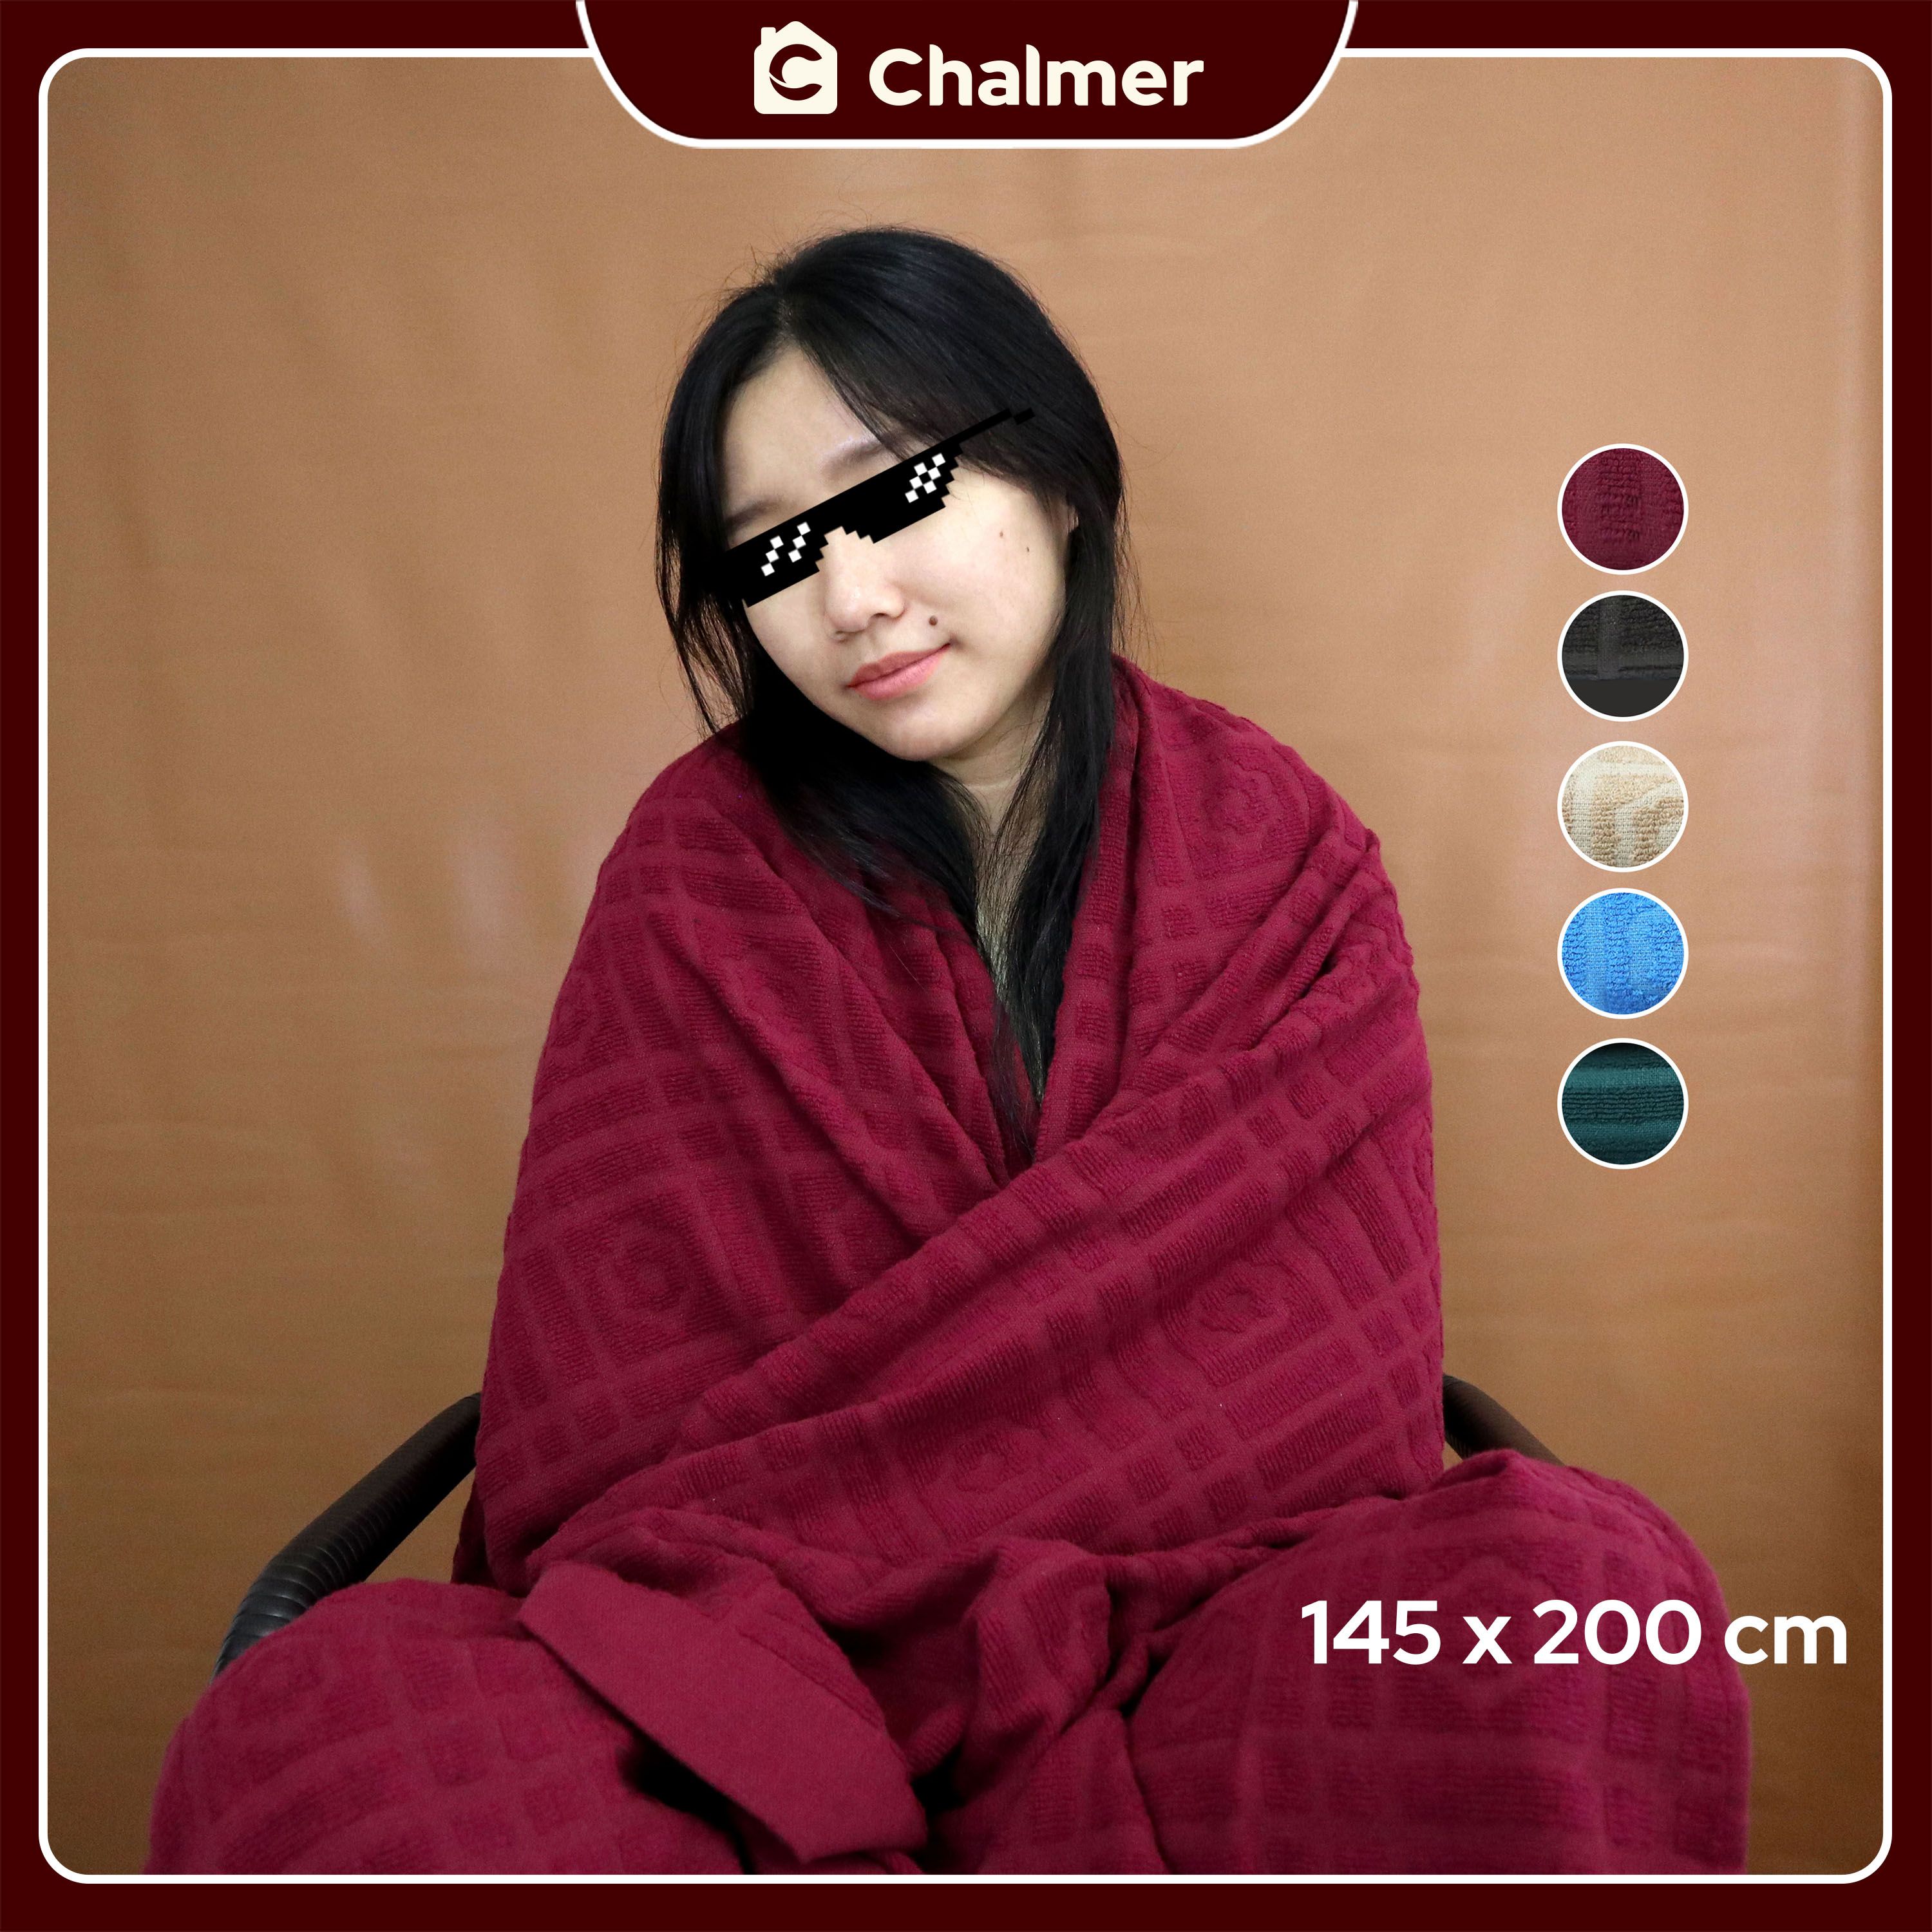 Selimut Katun Chalmer Ukuran 145x200 cm Terry Cloth Towel Blanket - Maroon - 2